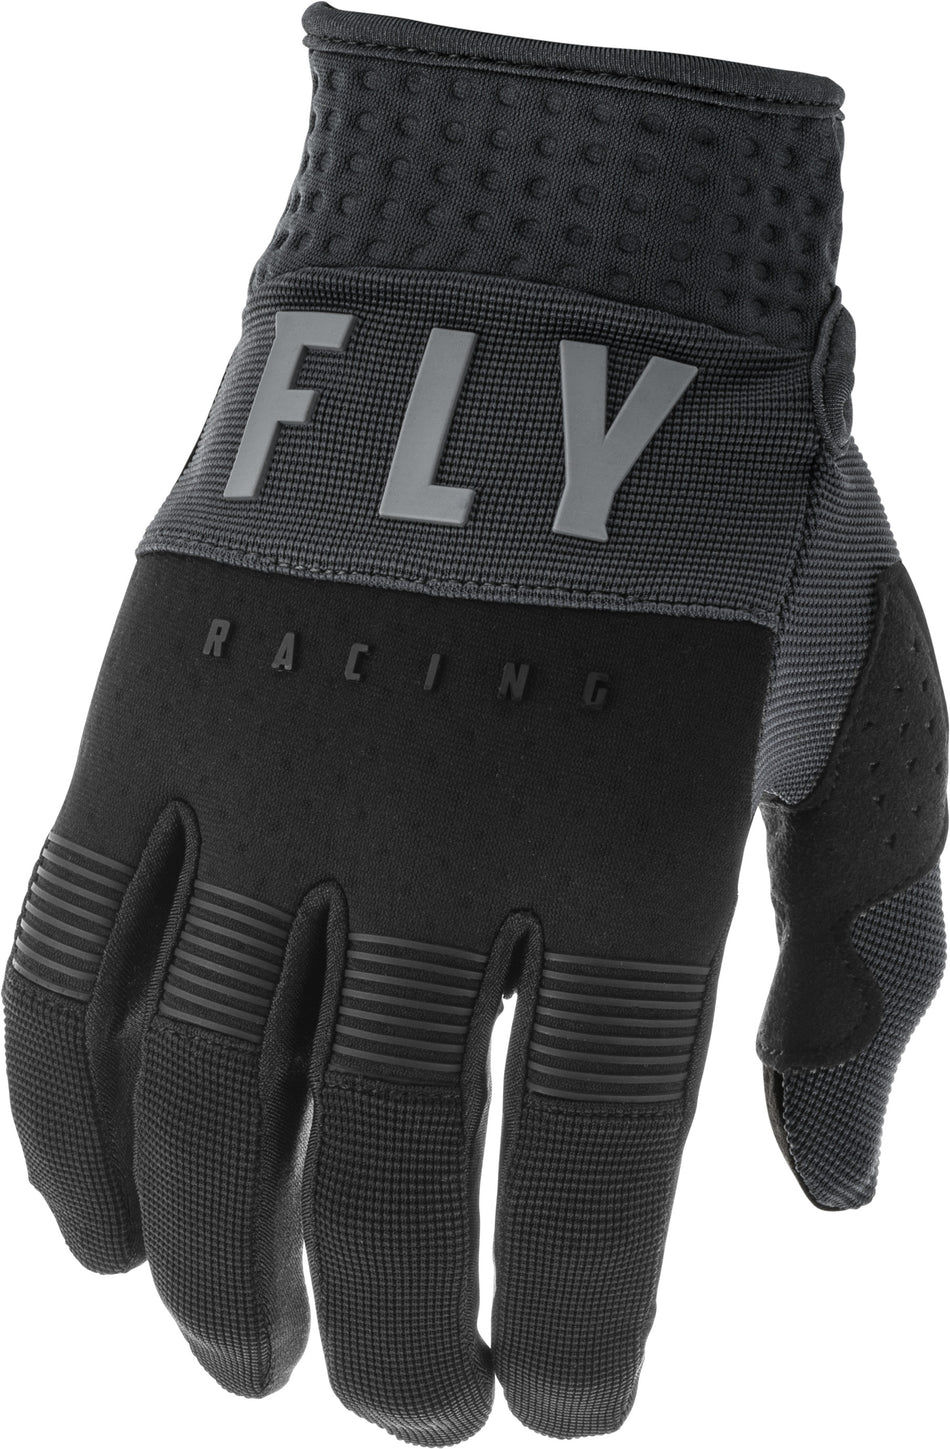 FLY RACING F-16 Gloves Black/Grey Sz 05 373-91005